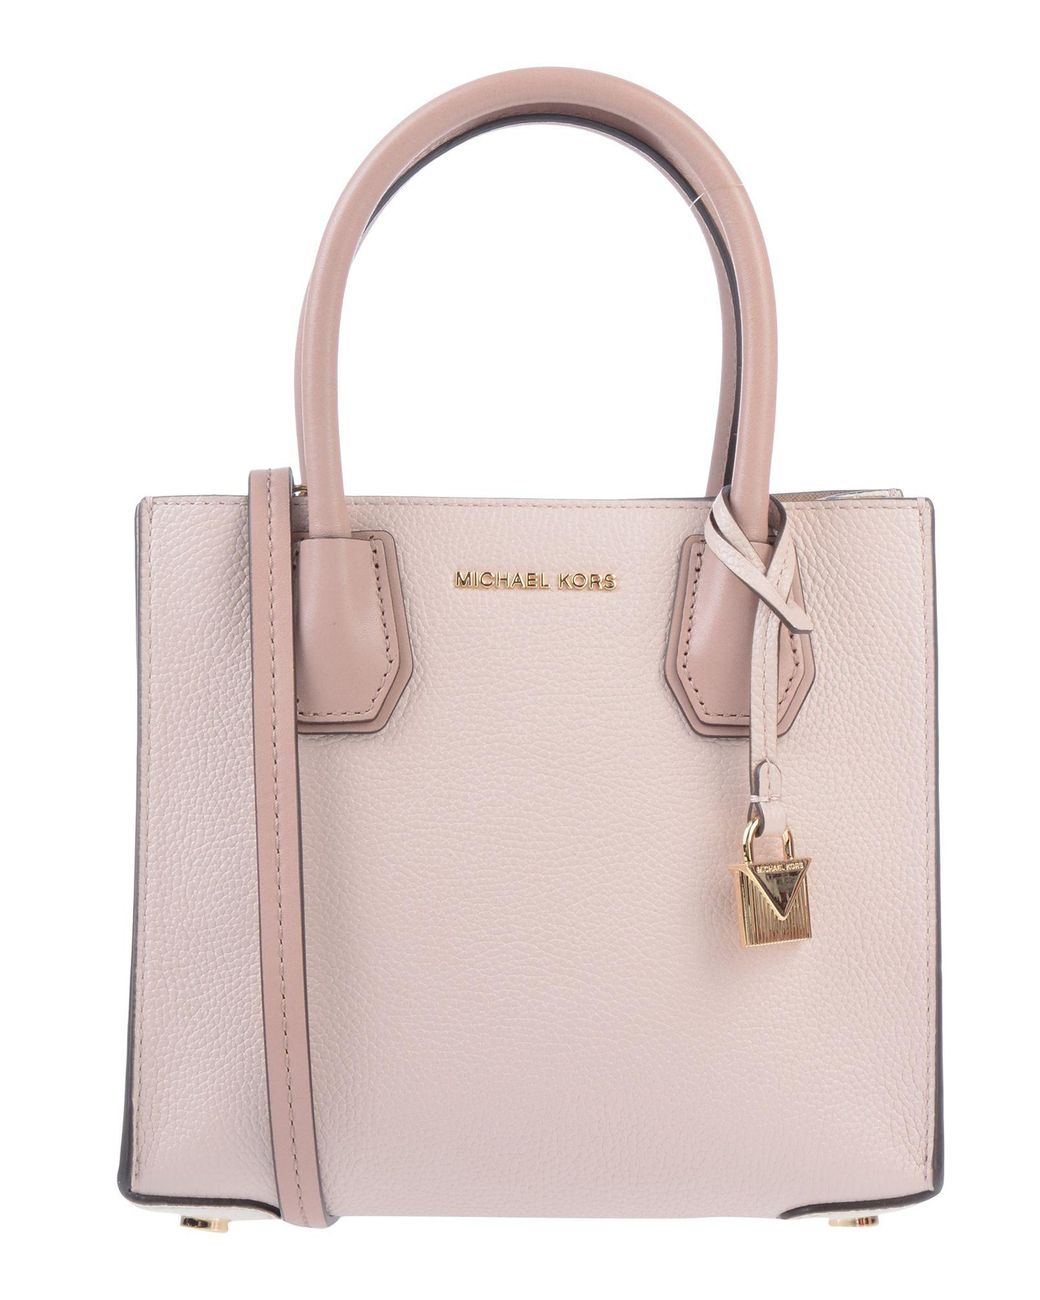 MICHAEL Michael Kors Leather Handbag in Light Pink (Pink) - Lyst